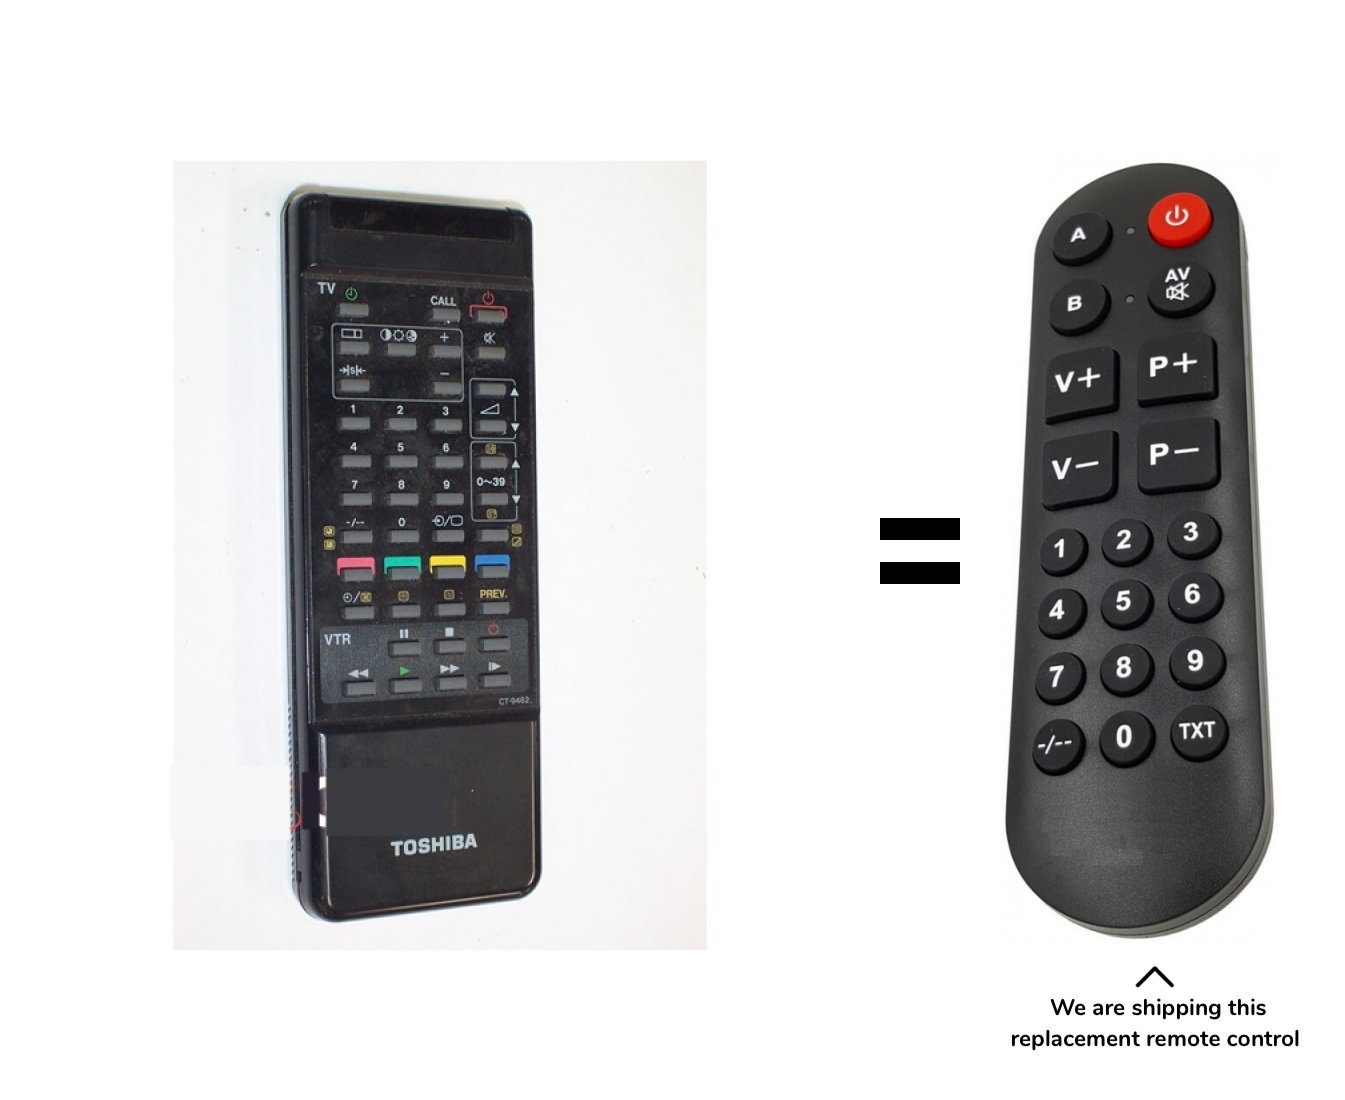 Toshiba CT-9475 remote control for seniors